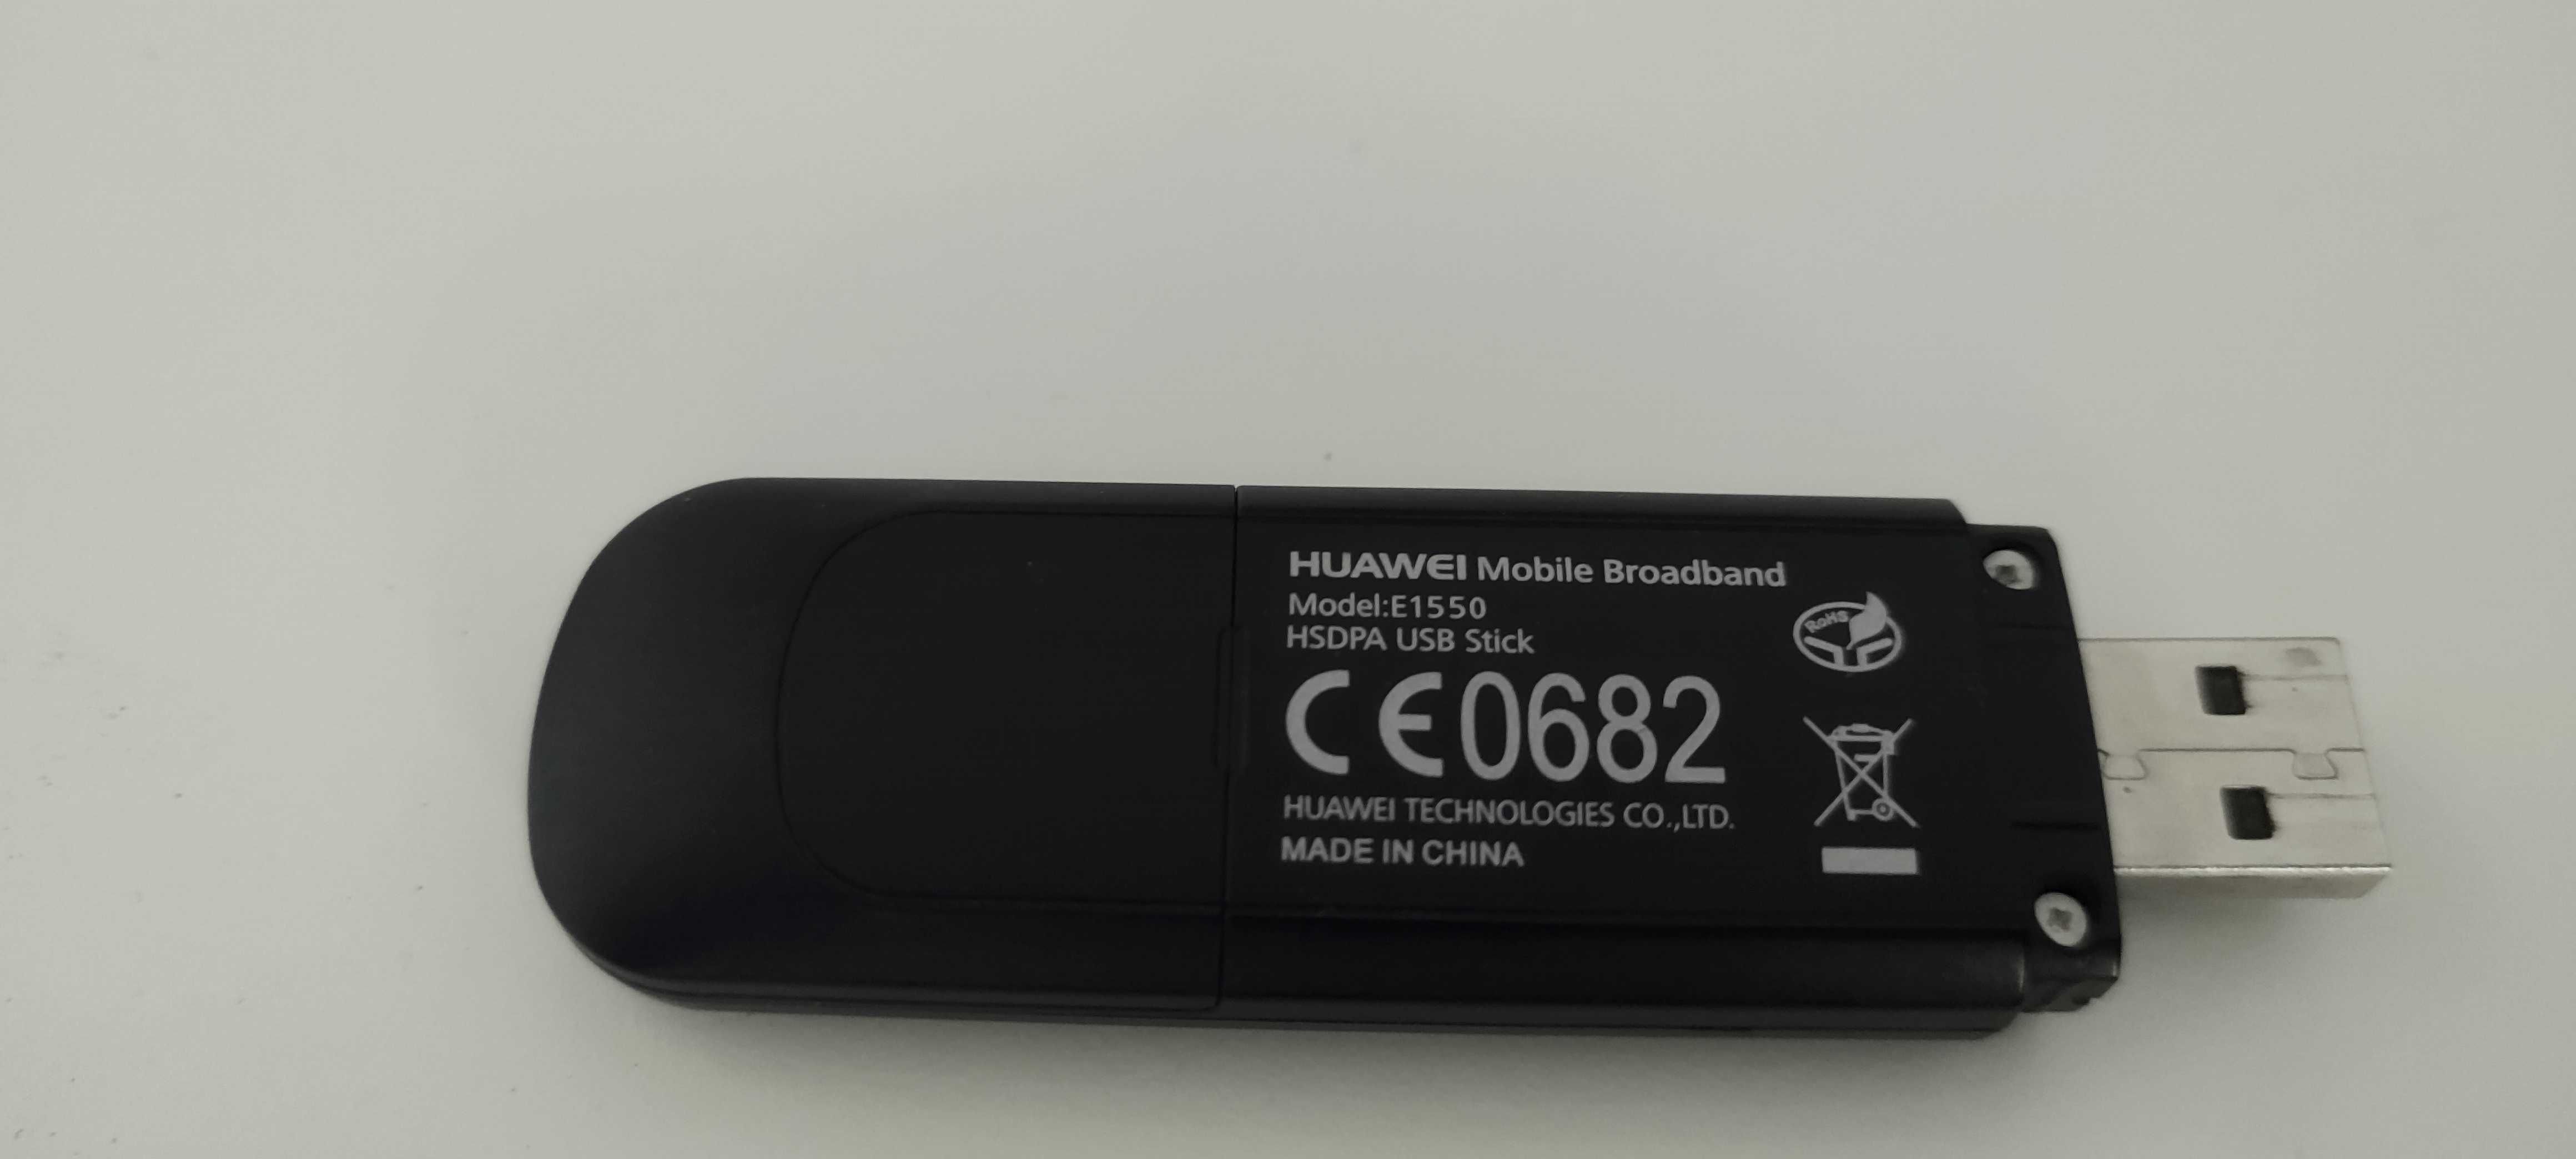 Pachet Router Wireless Cradlepoint MBR900 si modem Huawei E1550